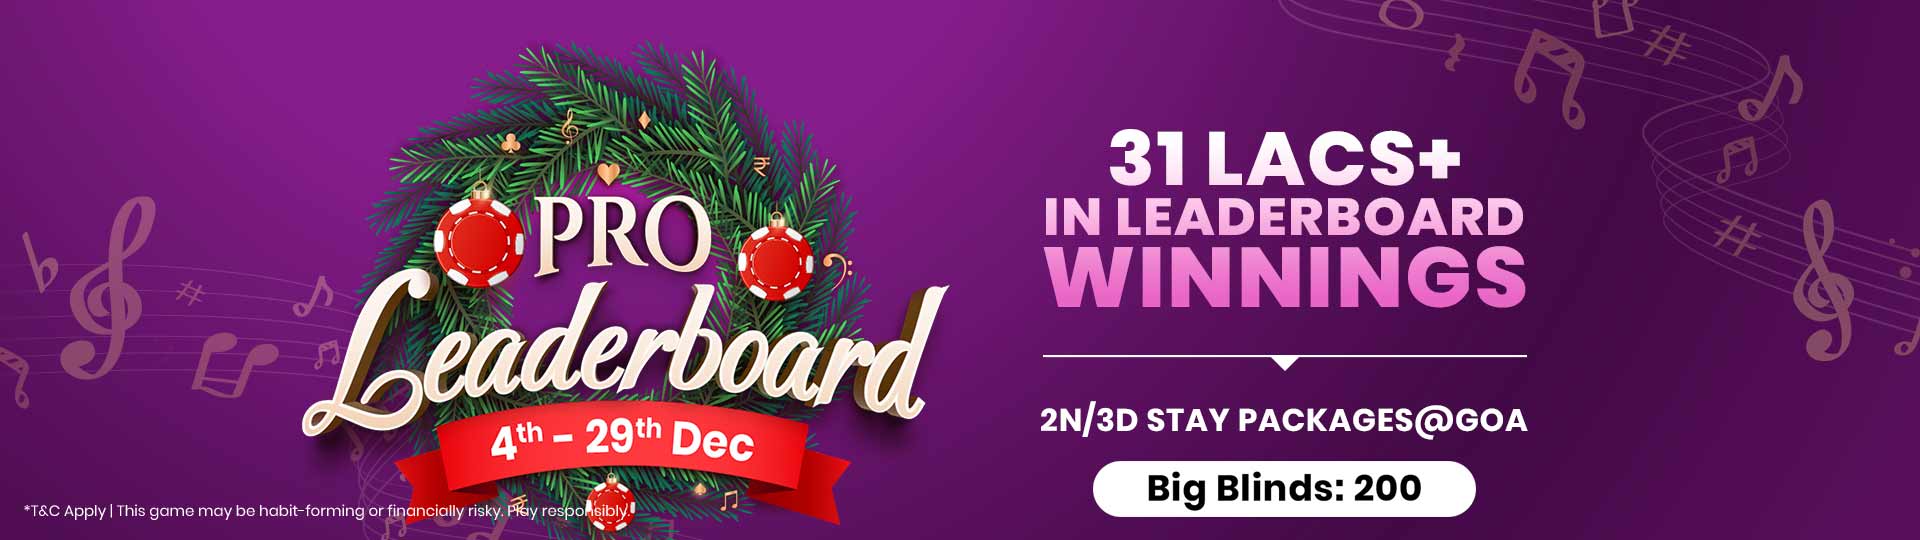 Adda52|Online|Poker|Pro Leaderboard|December